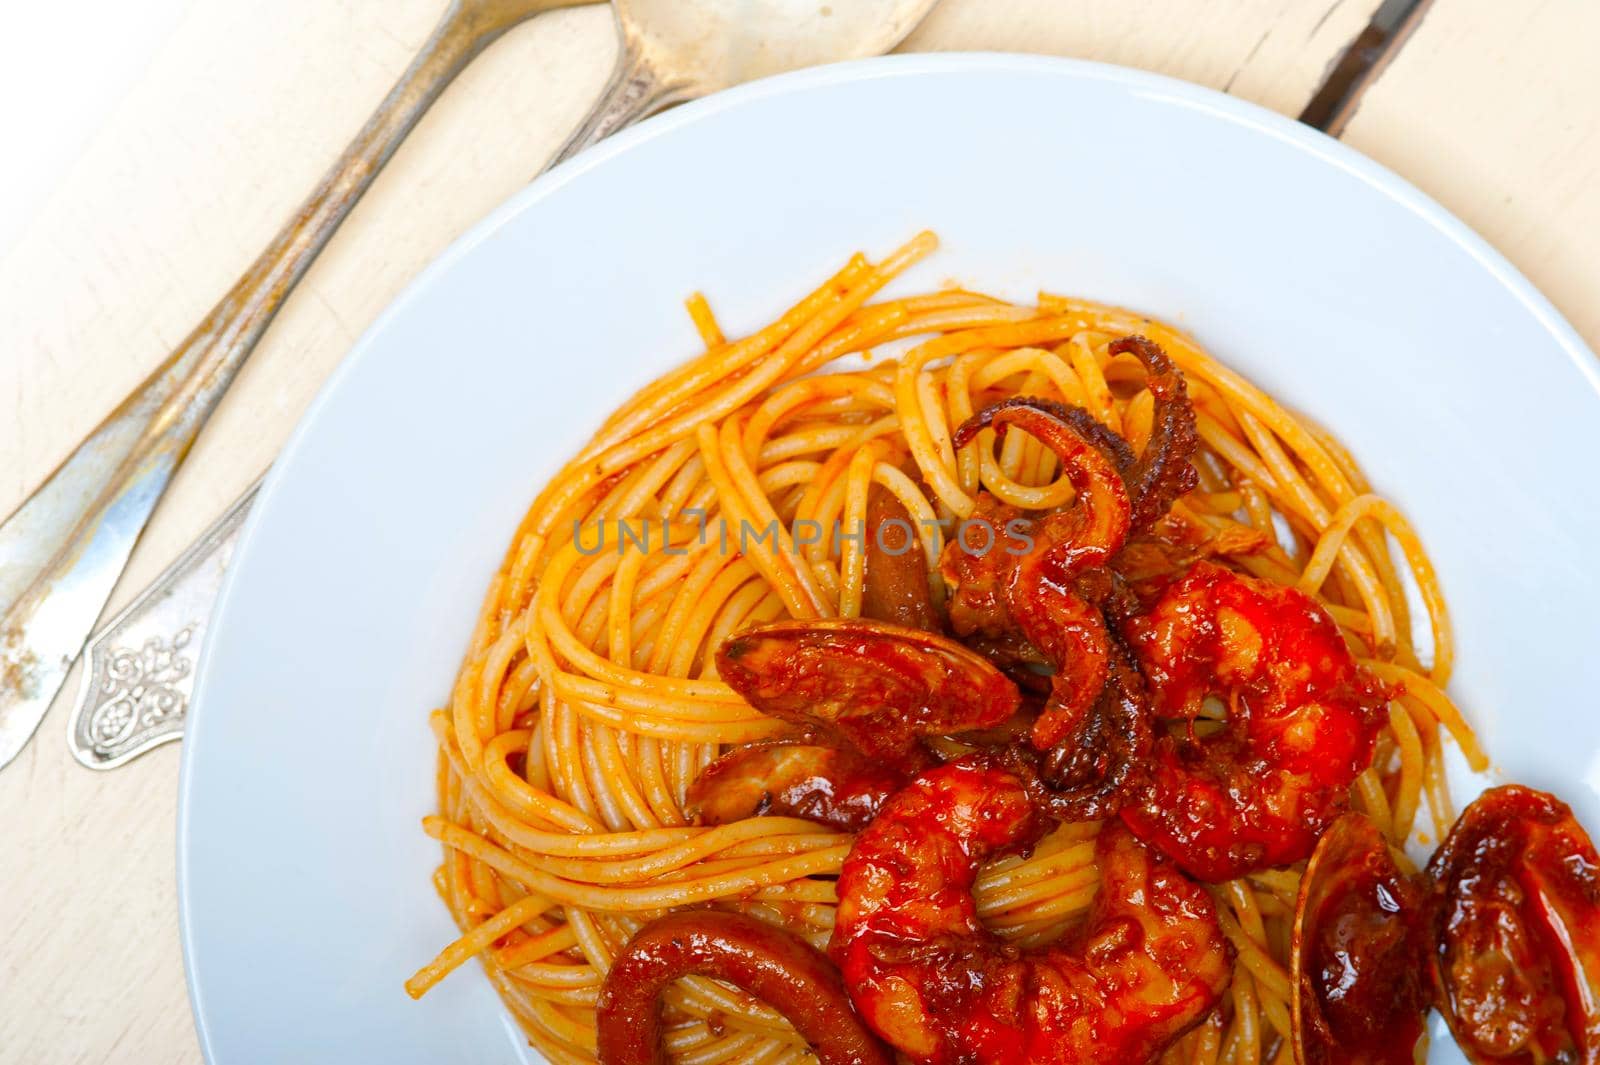 Italian seafood spaghetti pasta on red tomato sauce  by keko64